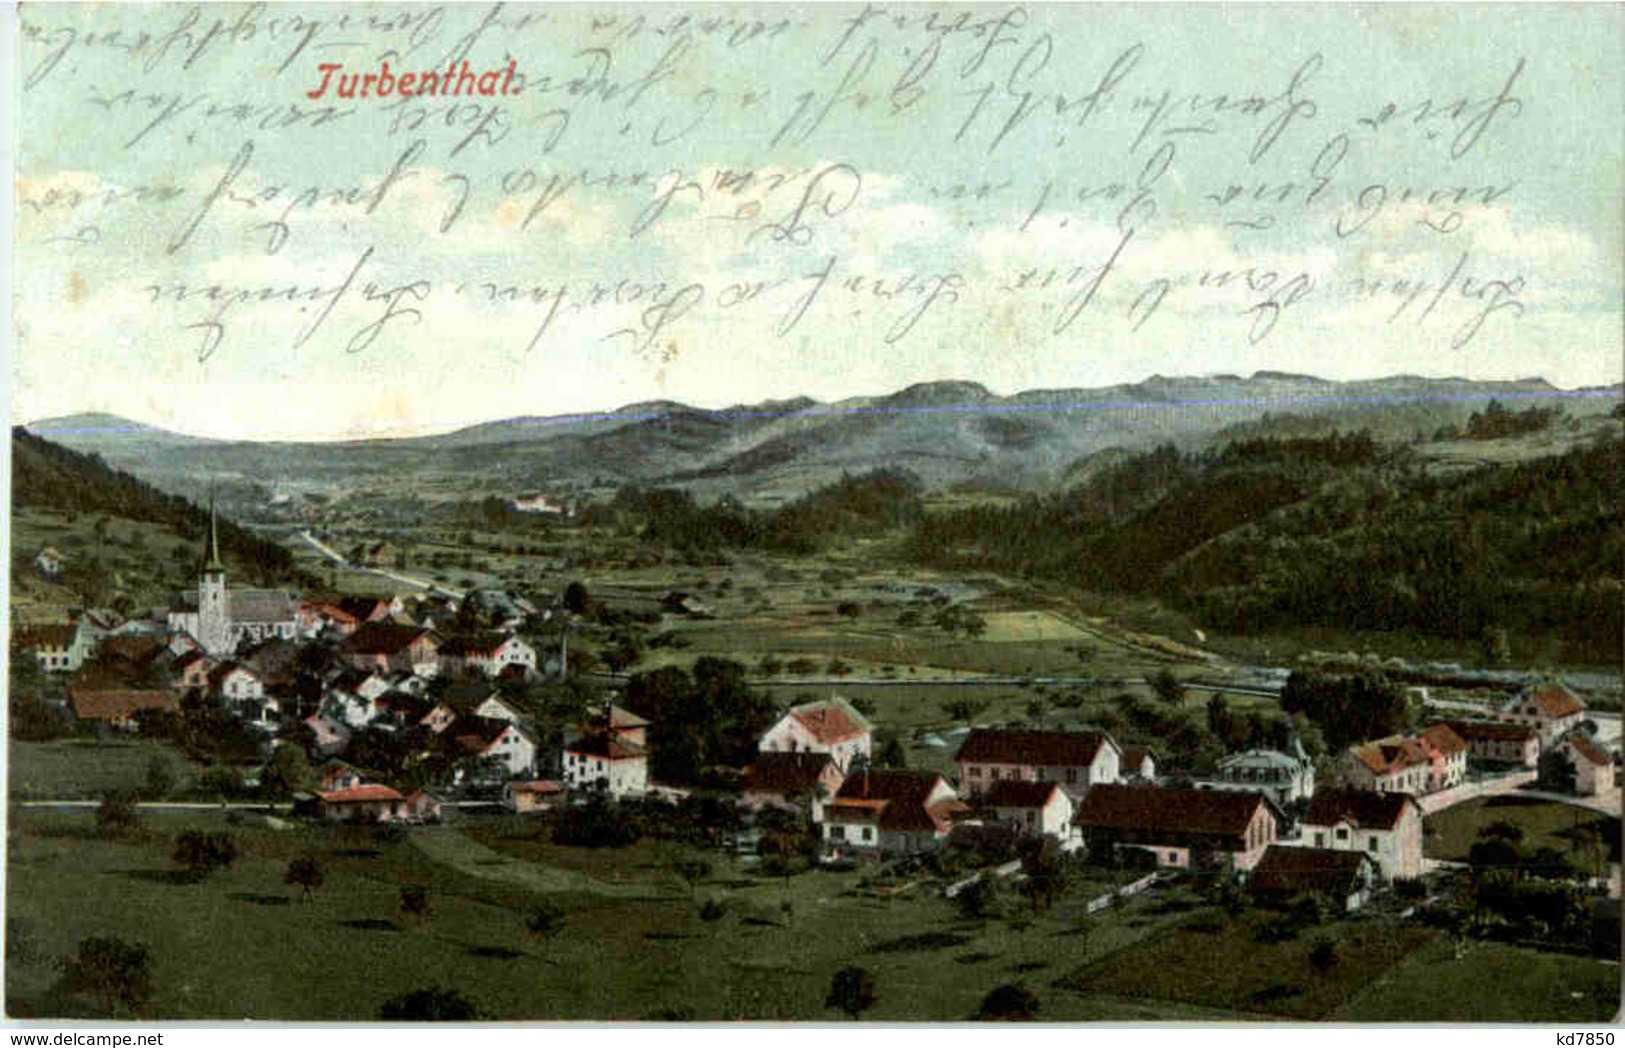 Turbenthal - Turbenthal